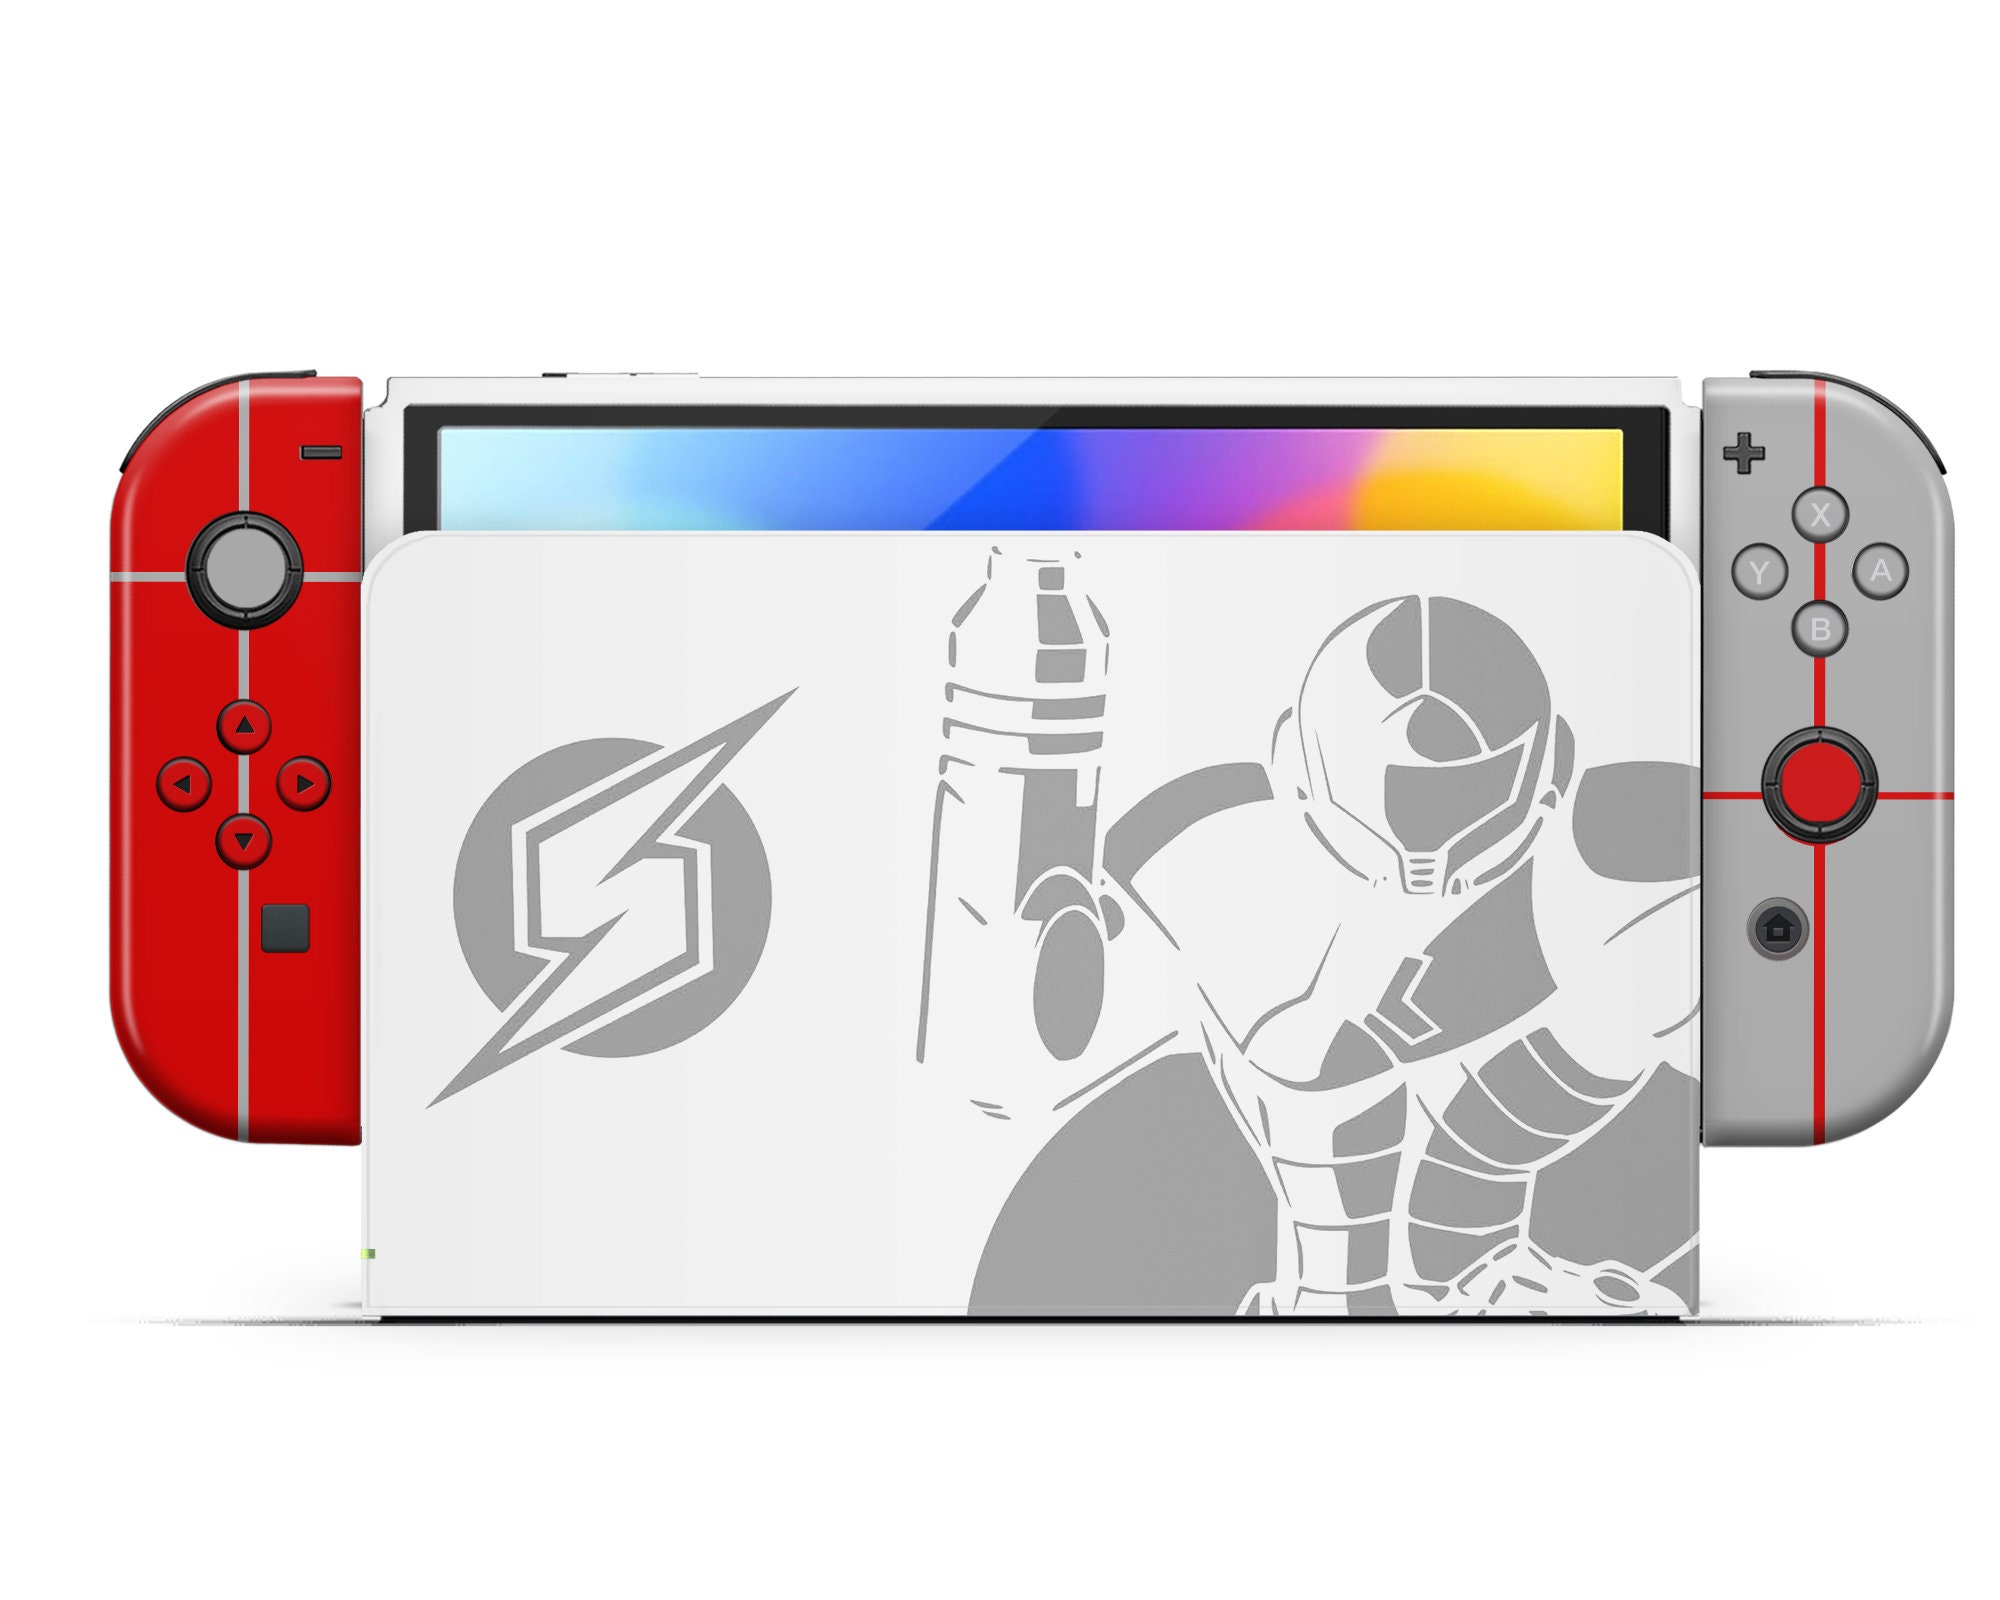 Nintendo Switch OLED (Blanca) + 3 Games + Joy Con (Verde / Rosa)